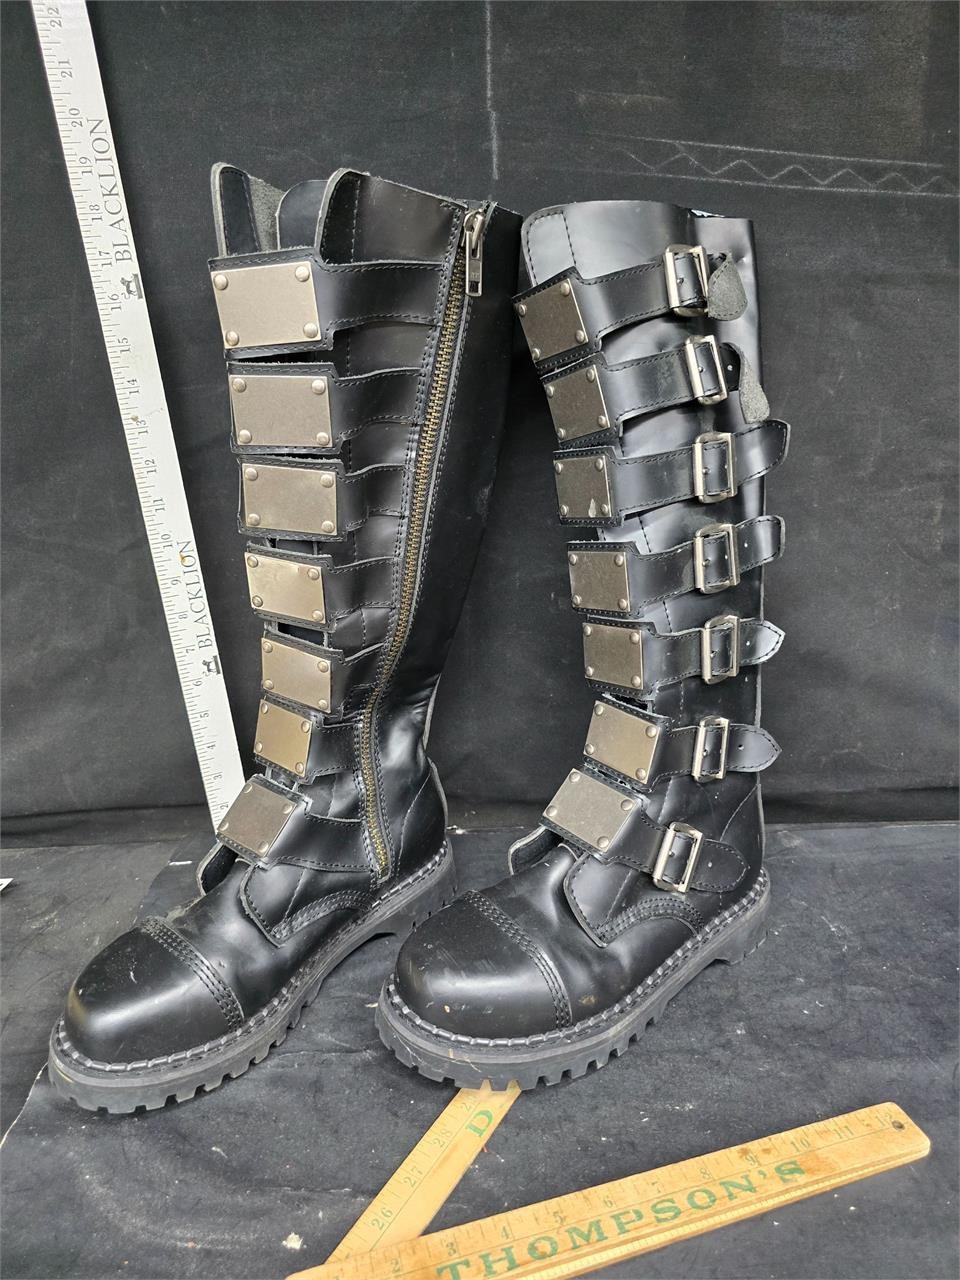 Demonica boots